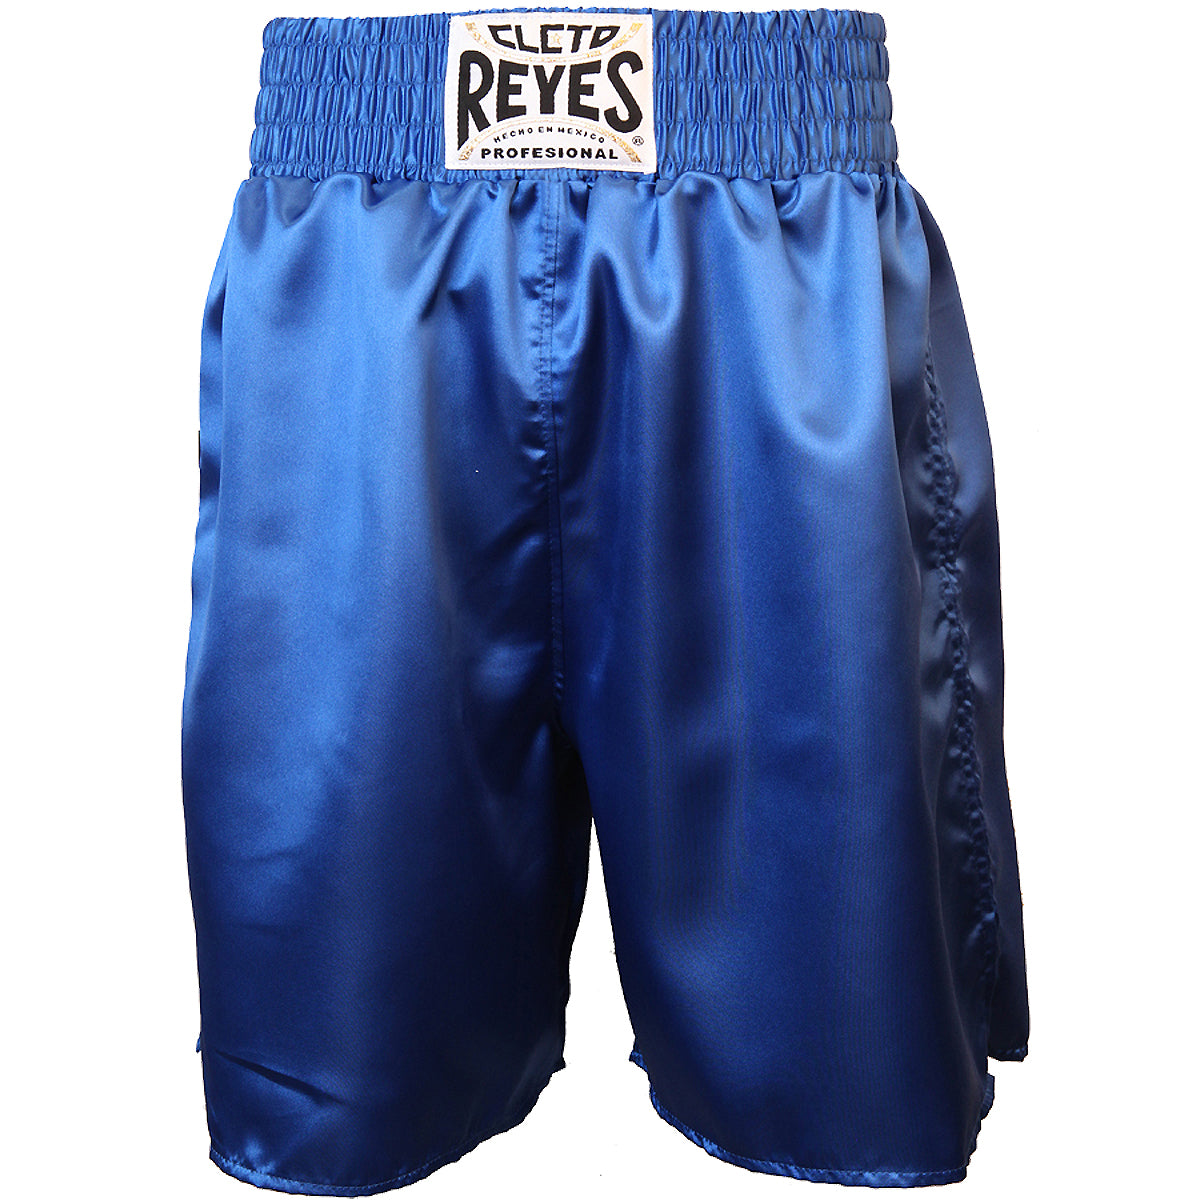 Cleto Reyes Satin Classic Boxing Trunks - Large (40") - Blue Cleto Reyes